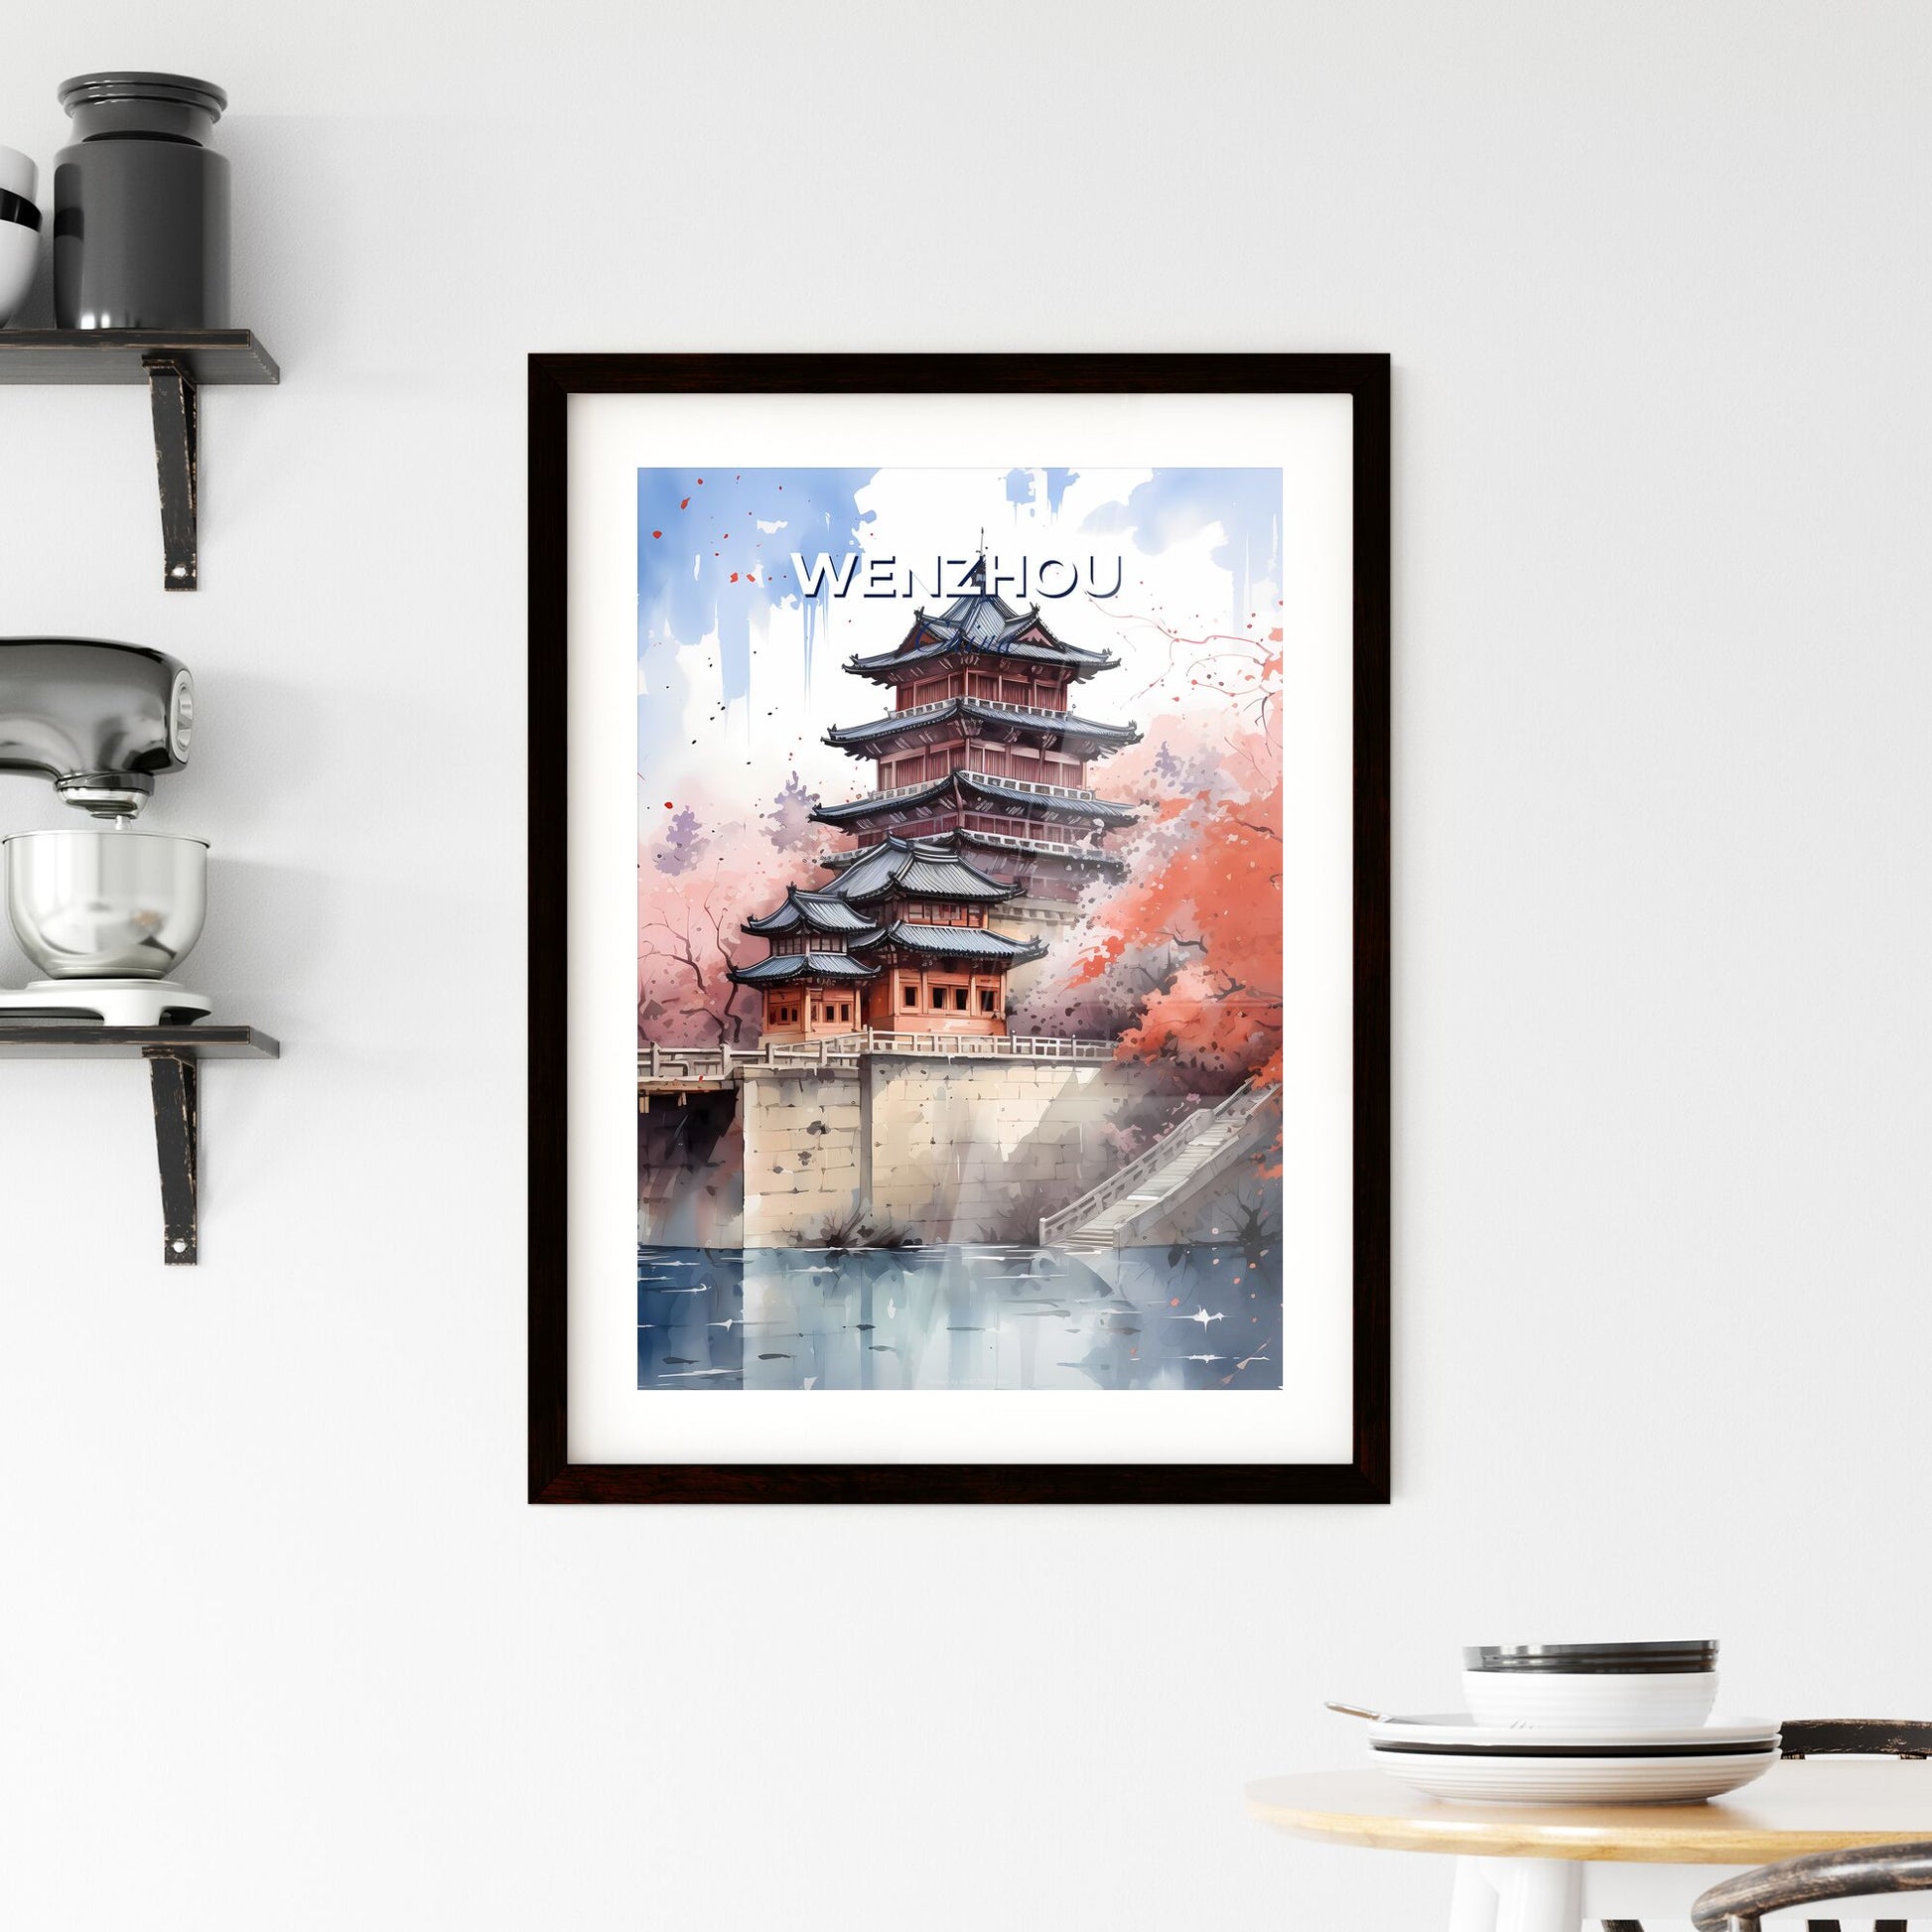 Wenzhou China Skyline Painting of a Pagoda on a Bridge Art Print Wall Decor Default Title